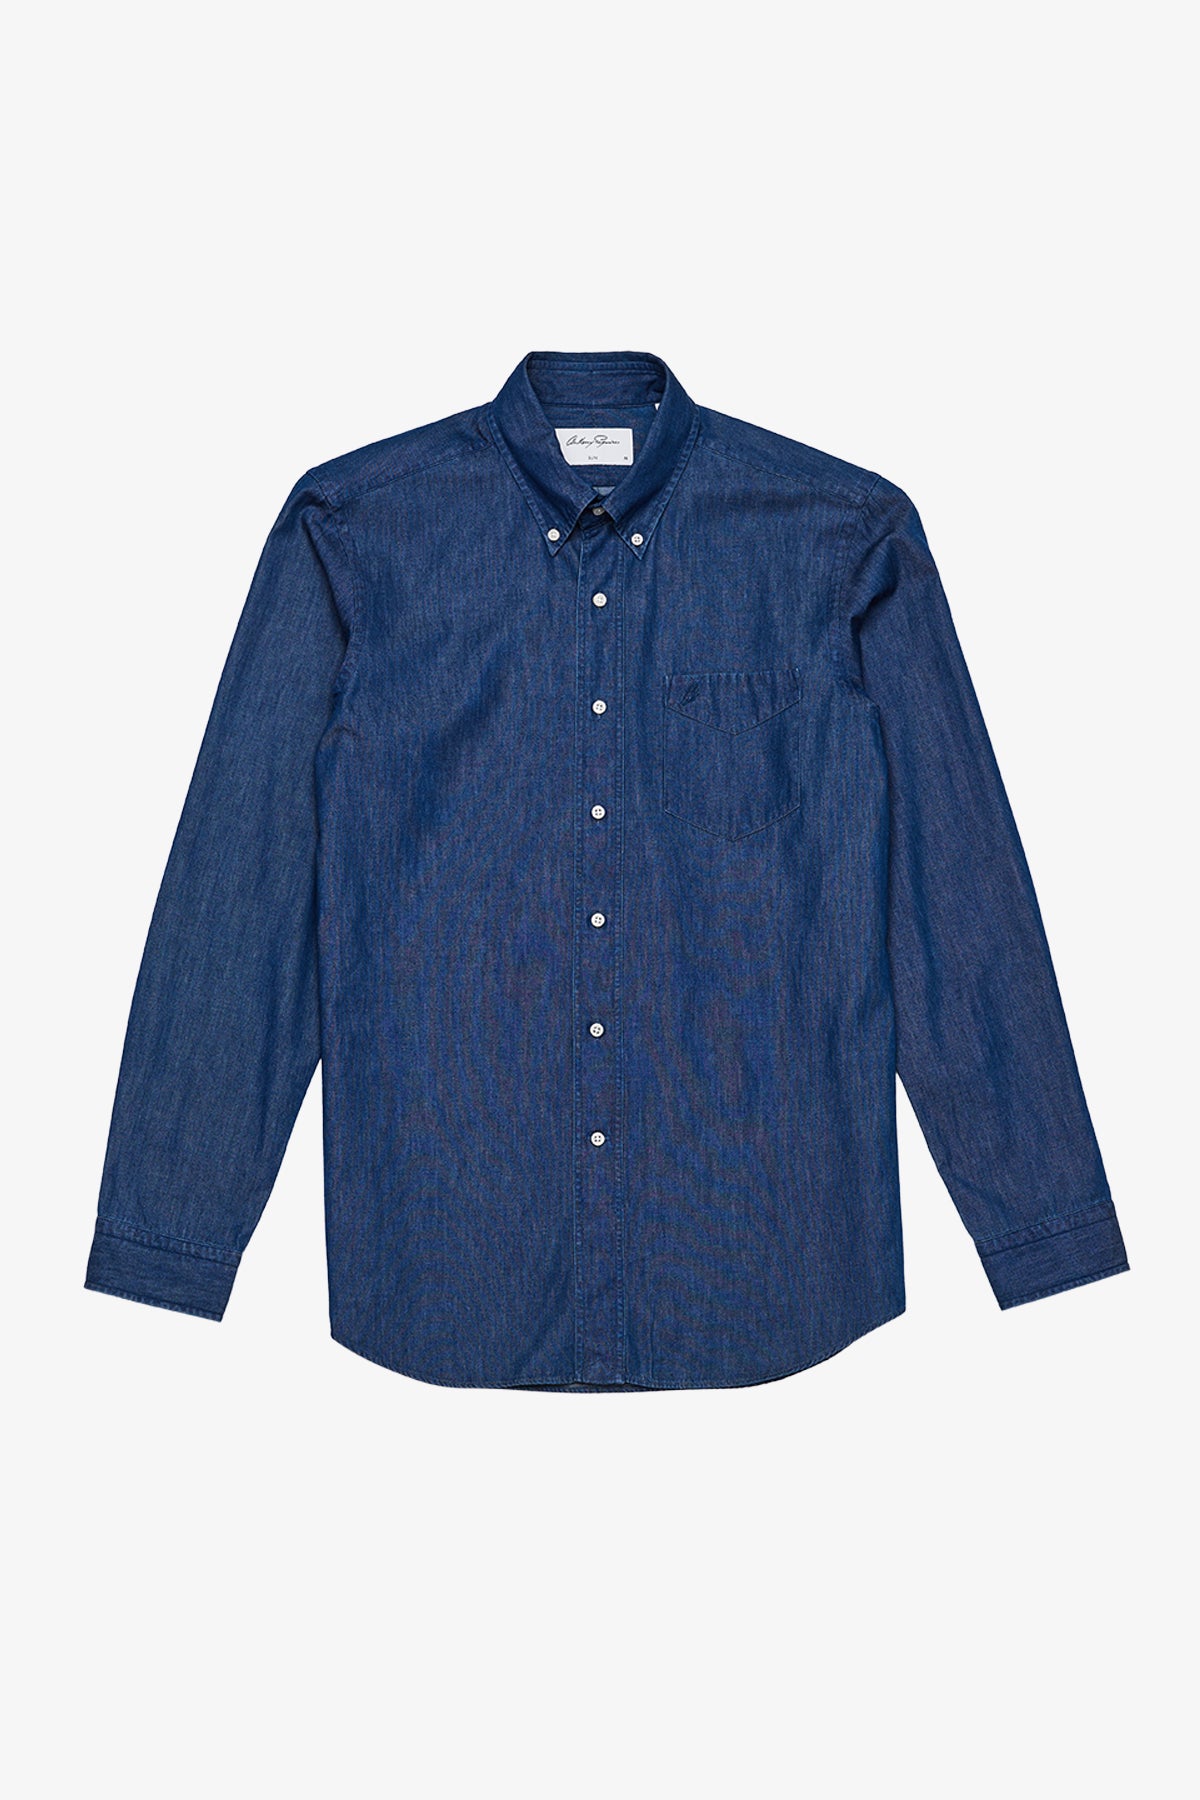 Alden - Dark Blue Casual Shirt